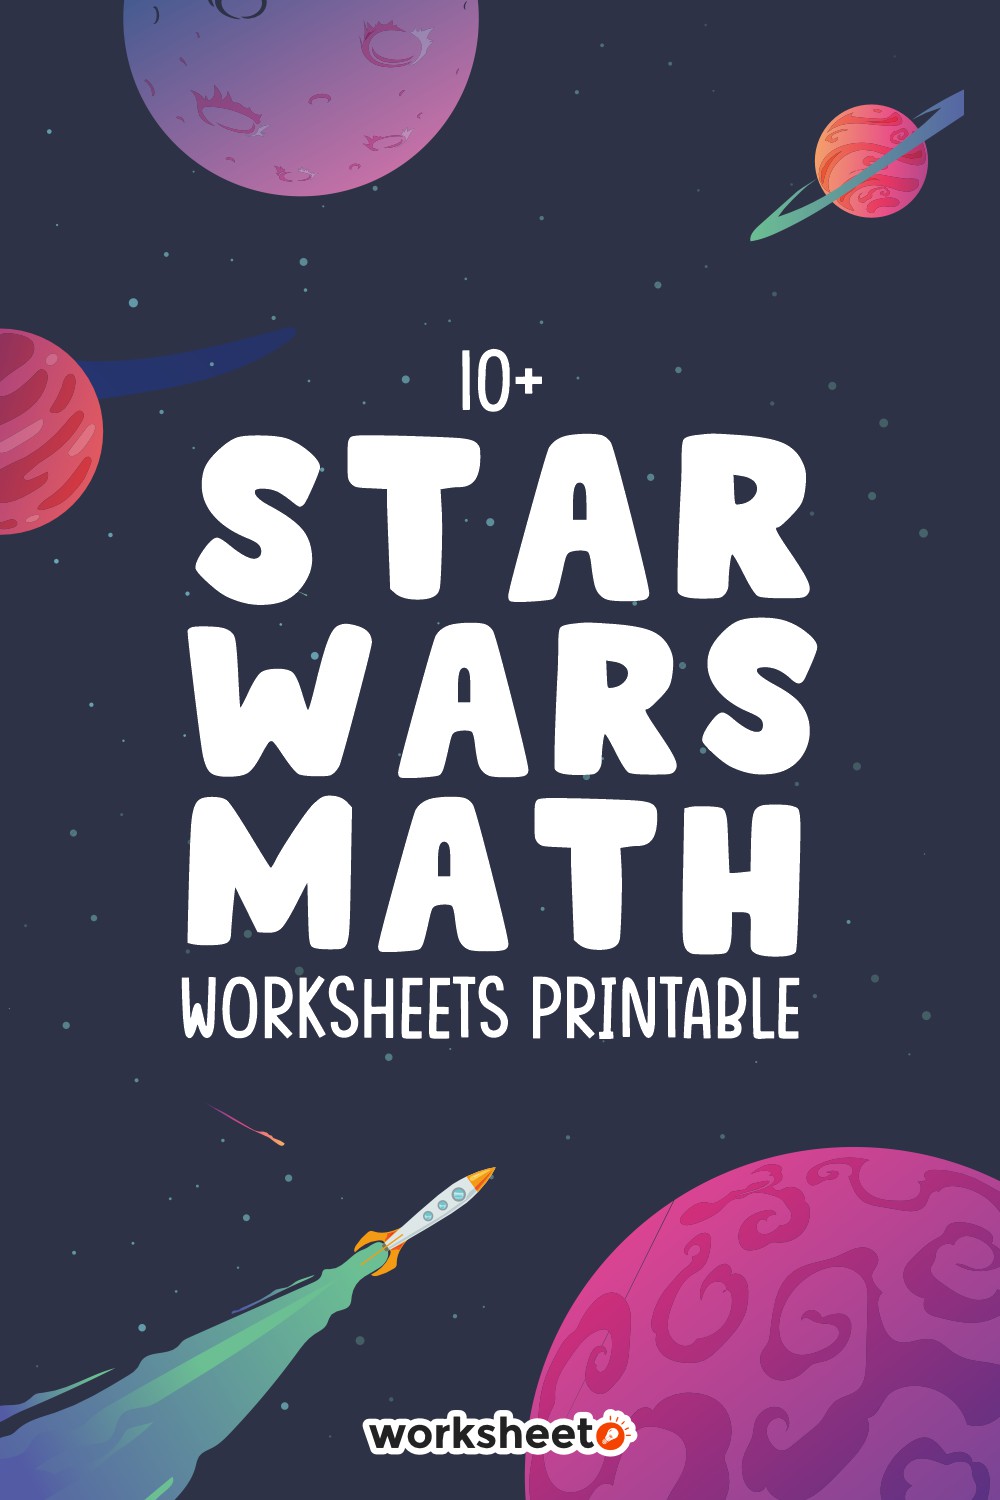 15 Images of Star Wars Math Worksheets Printable